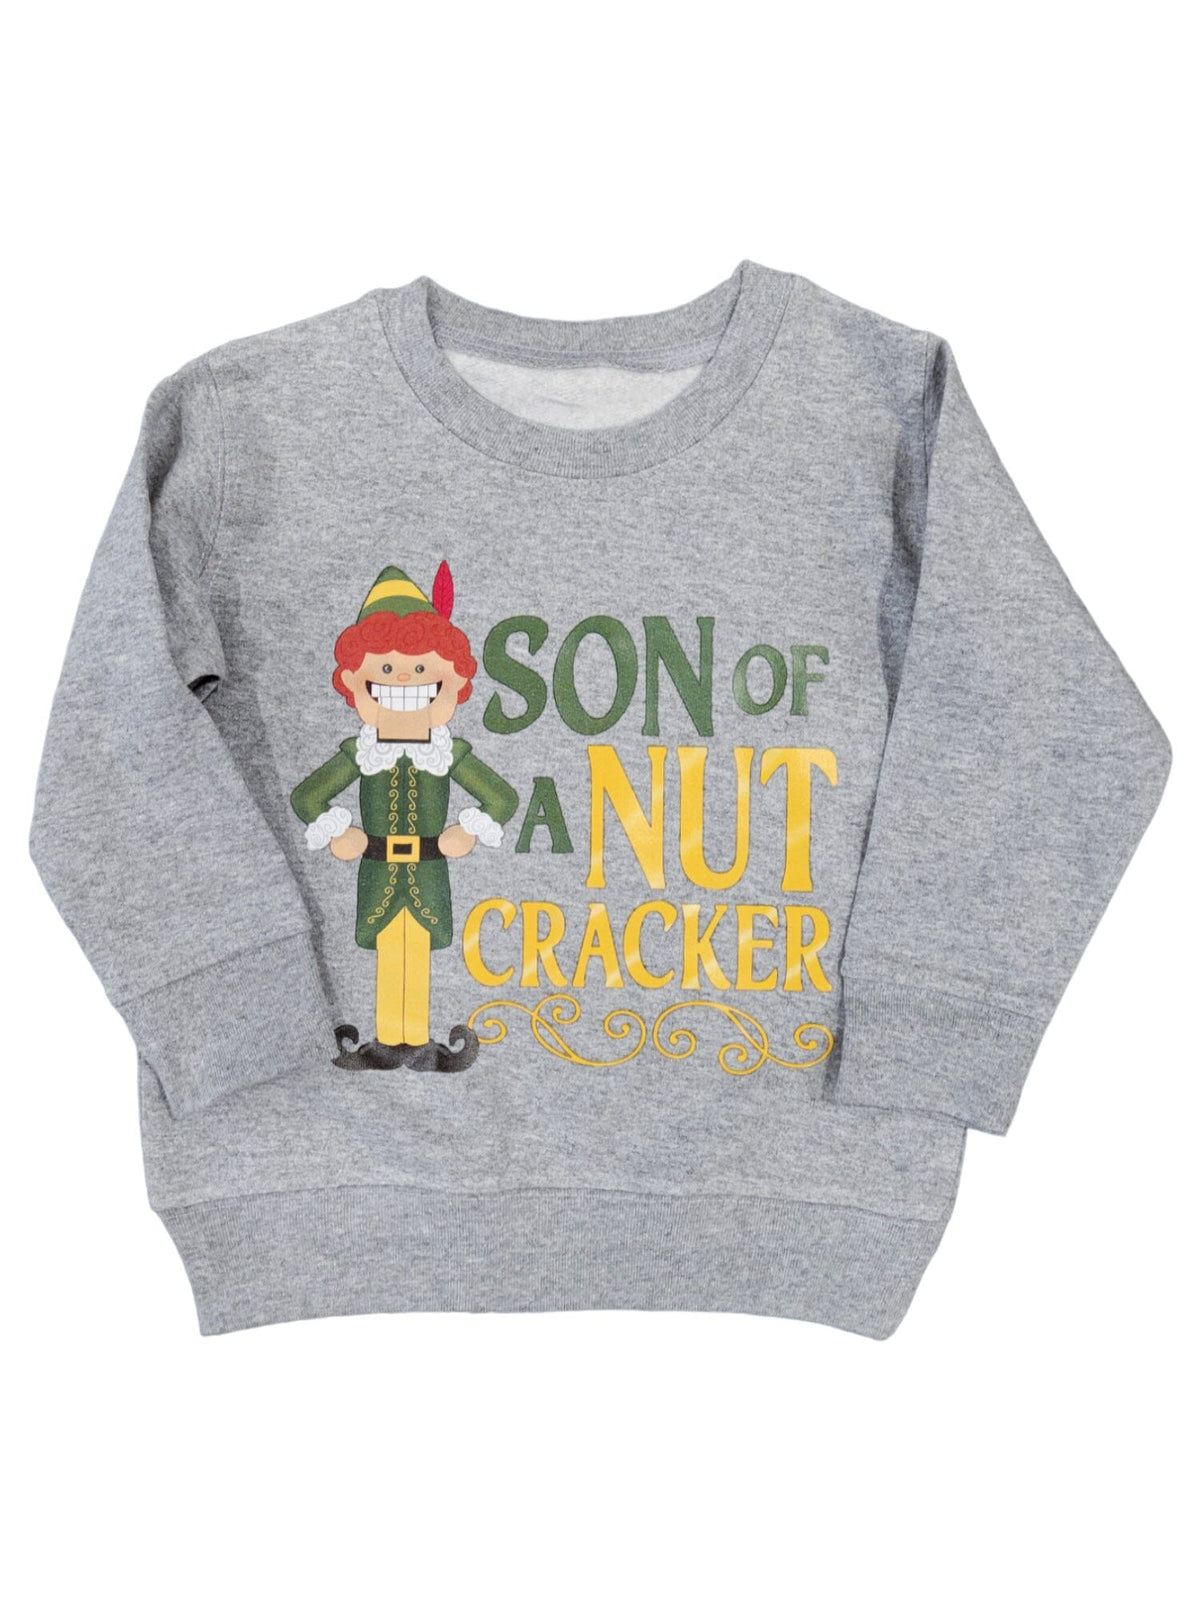 Son of a Nut Cracker Toddler Crew